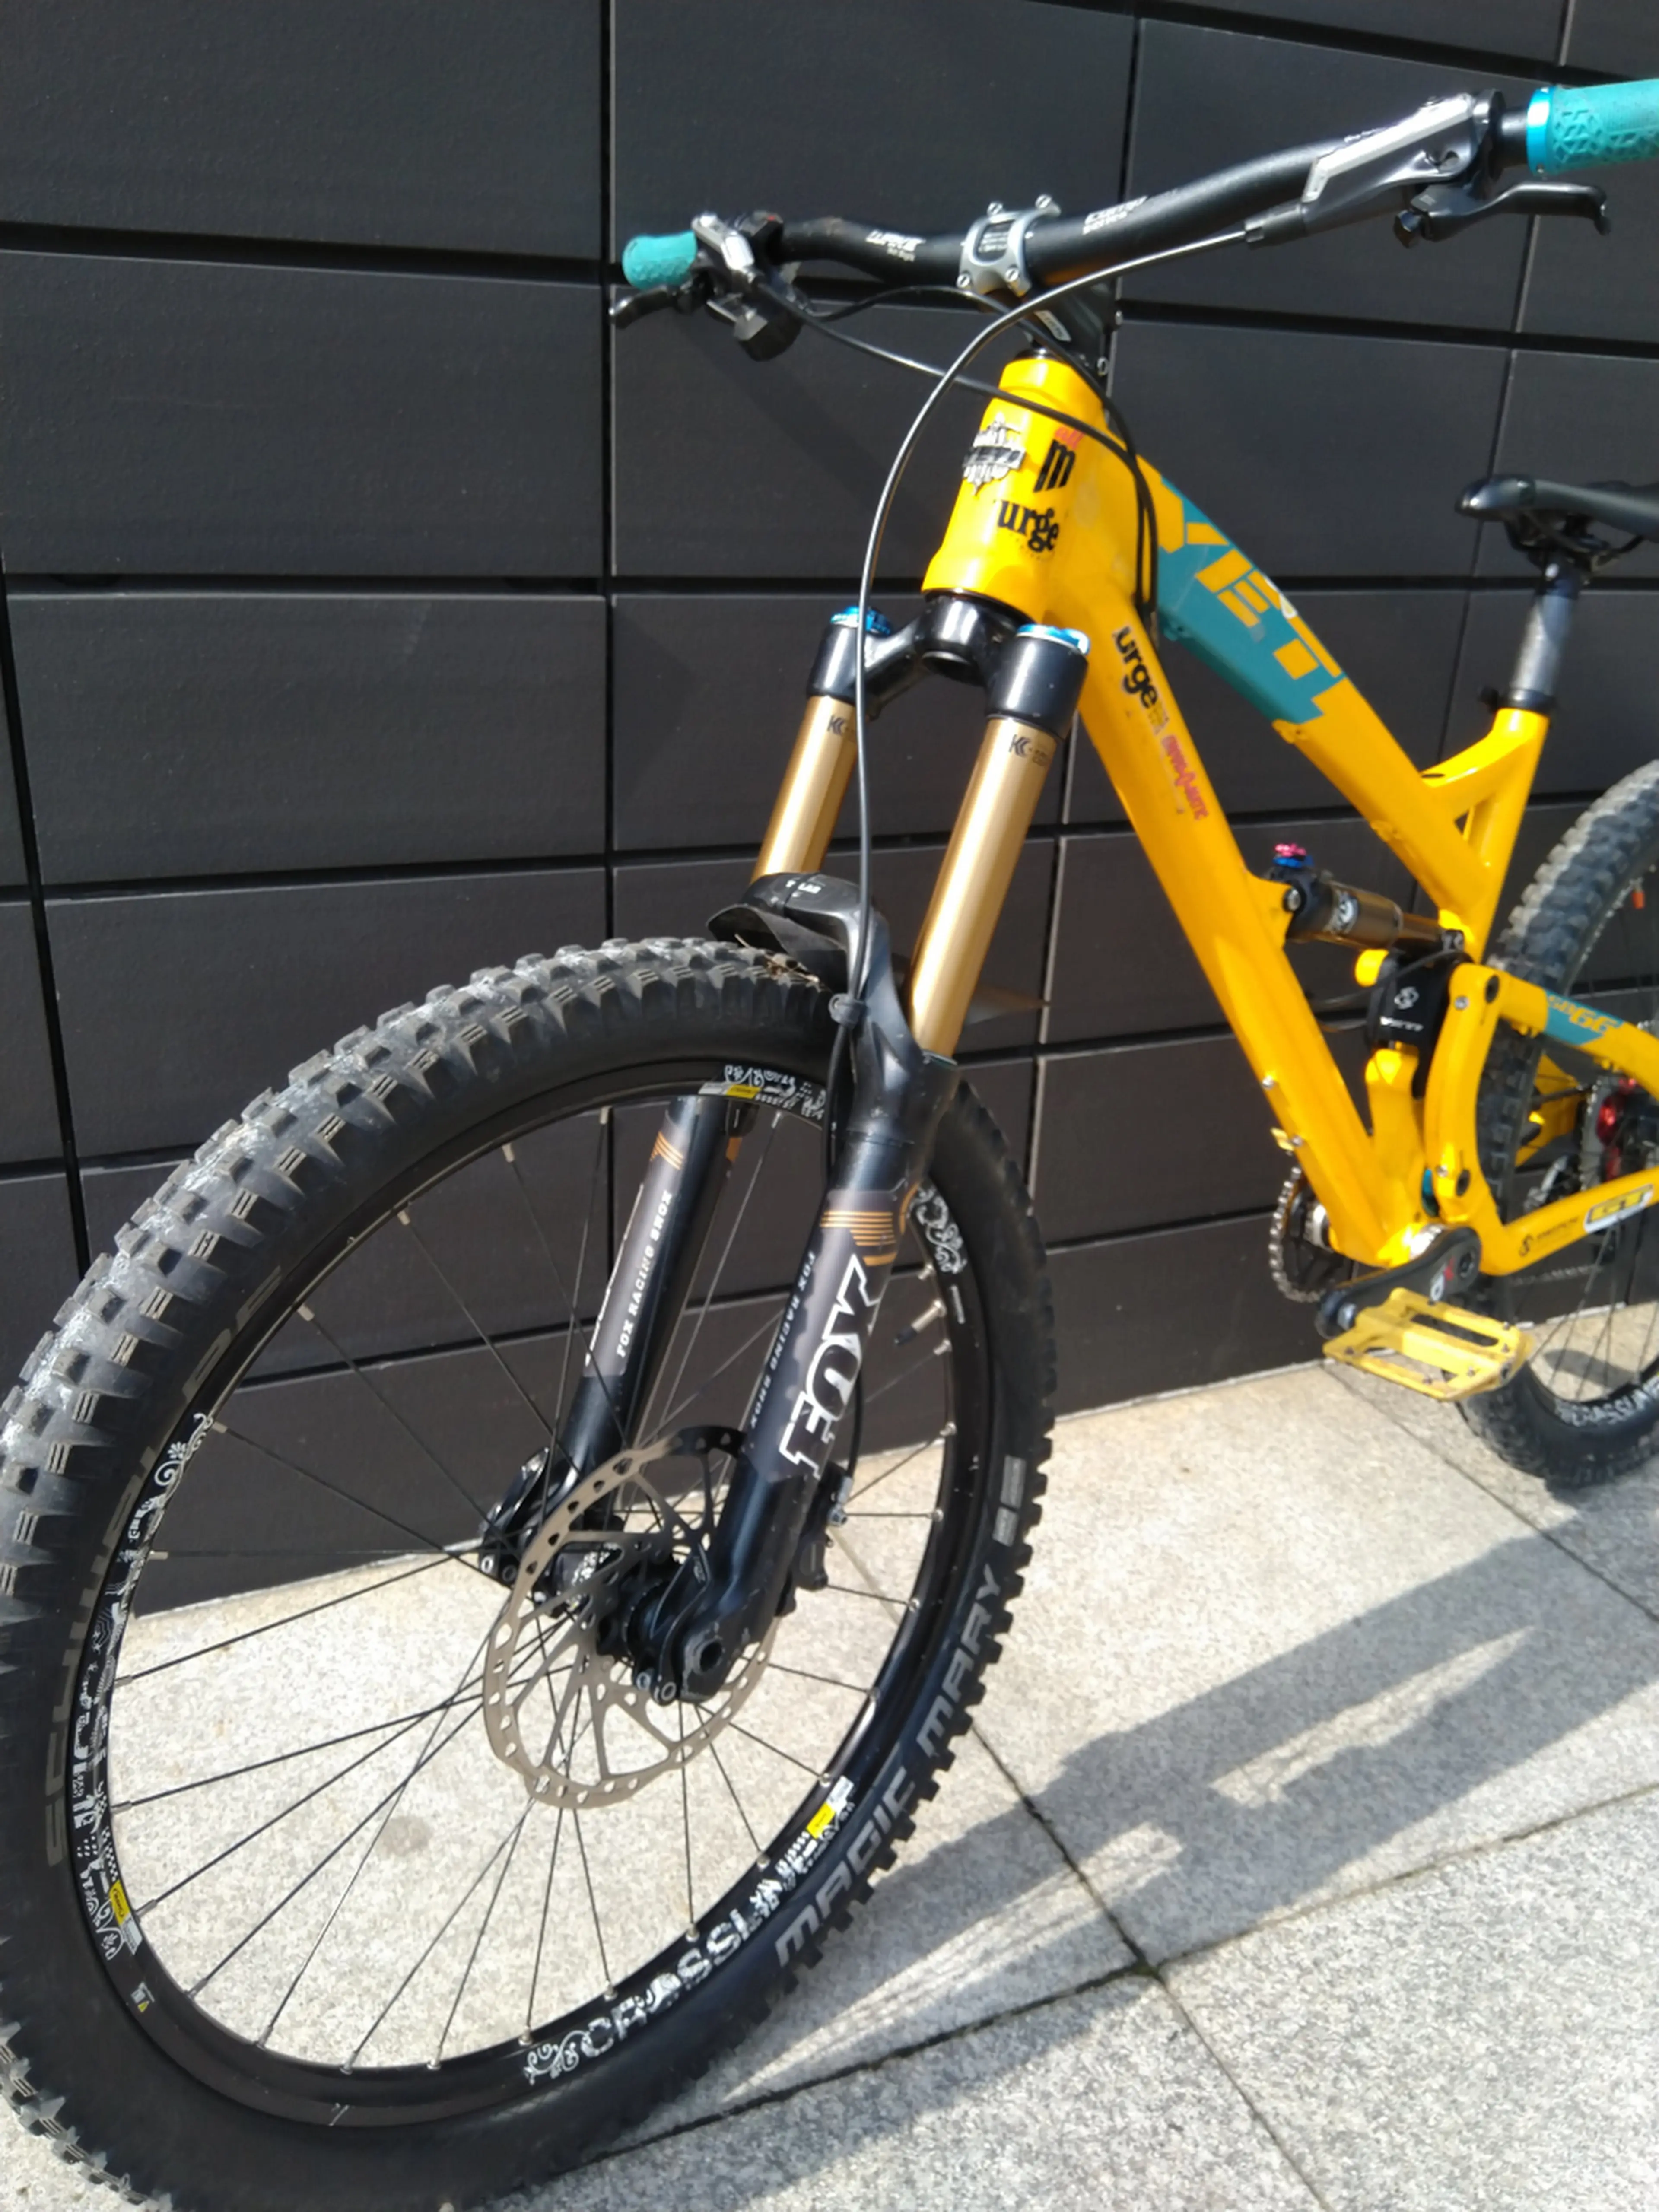 3. (Vândută) Bicicletă Yeti SB66, mărime S, roți 26", an 2014